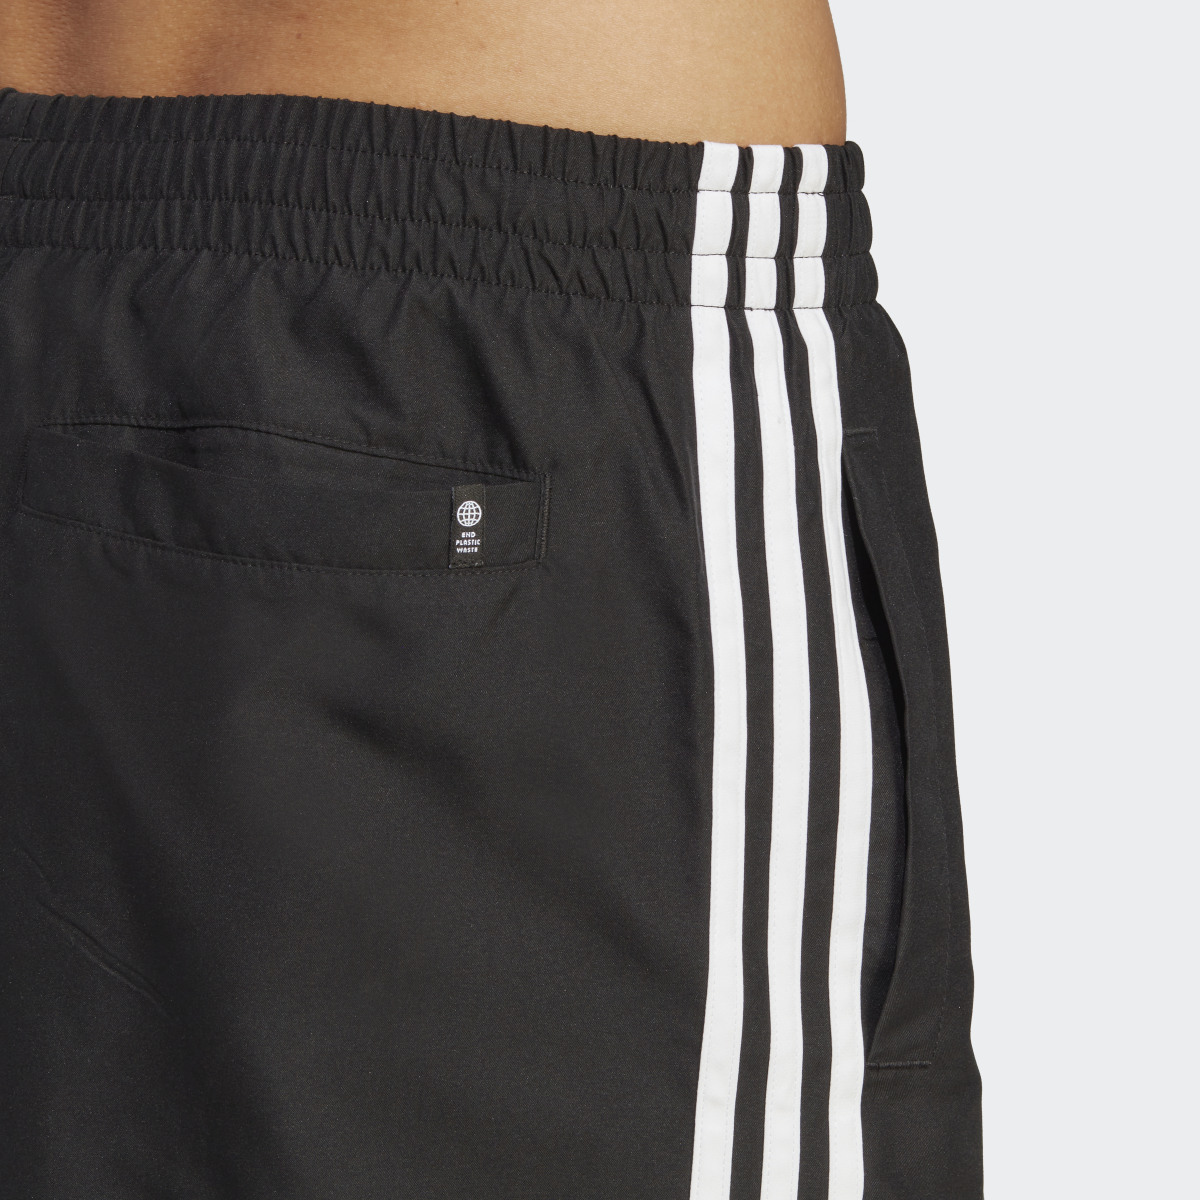 Adidas Originals adicolor 3-Streifen Short Length Badeshorts. 6